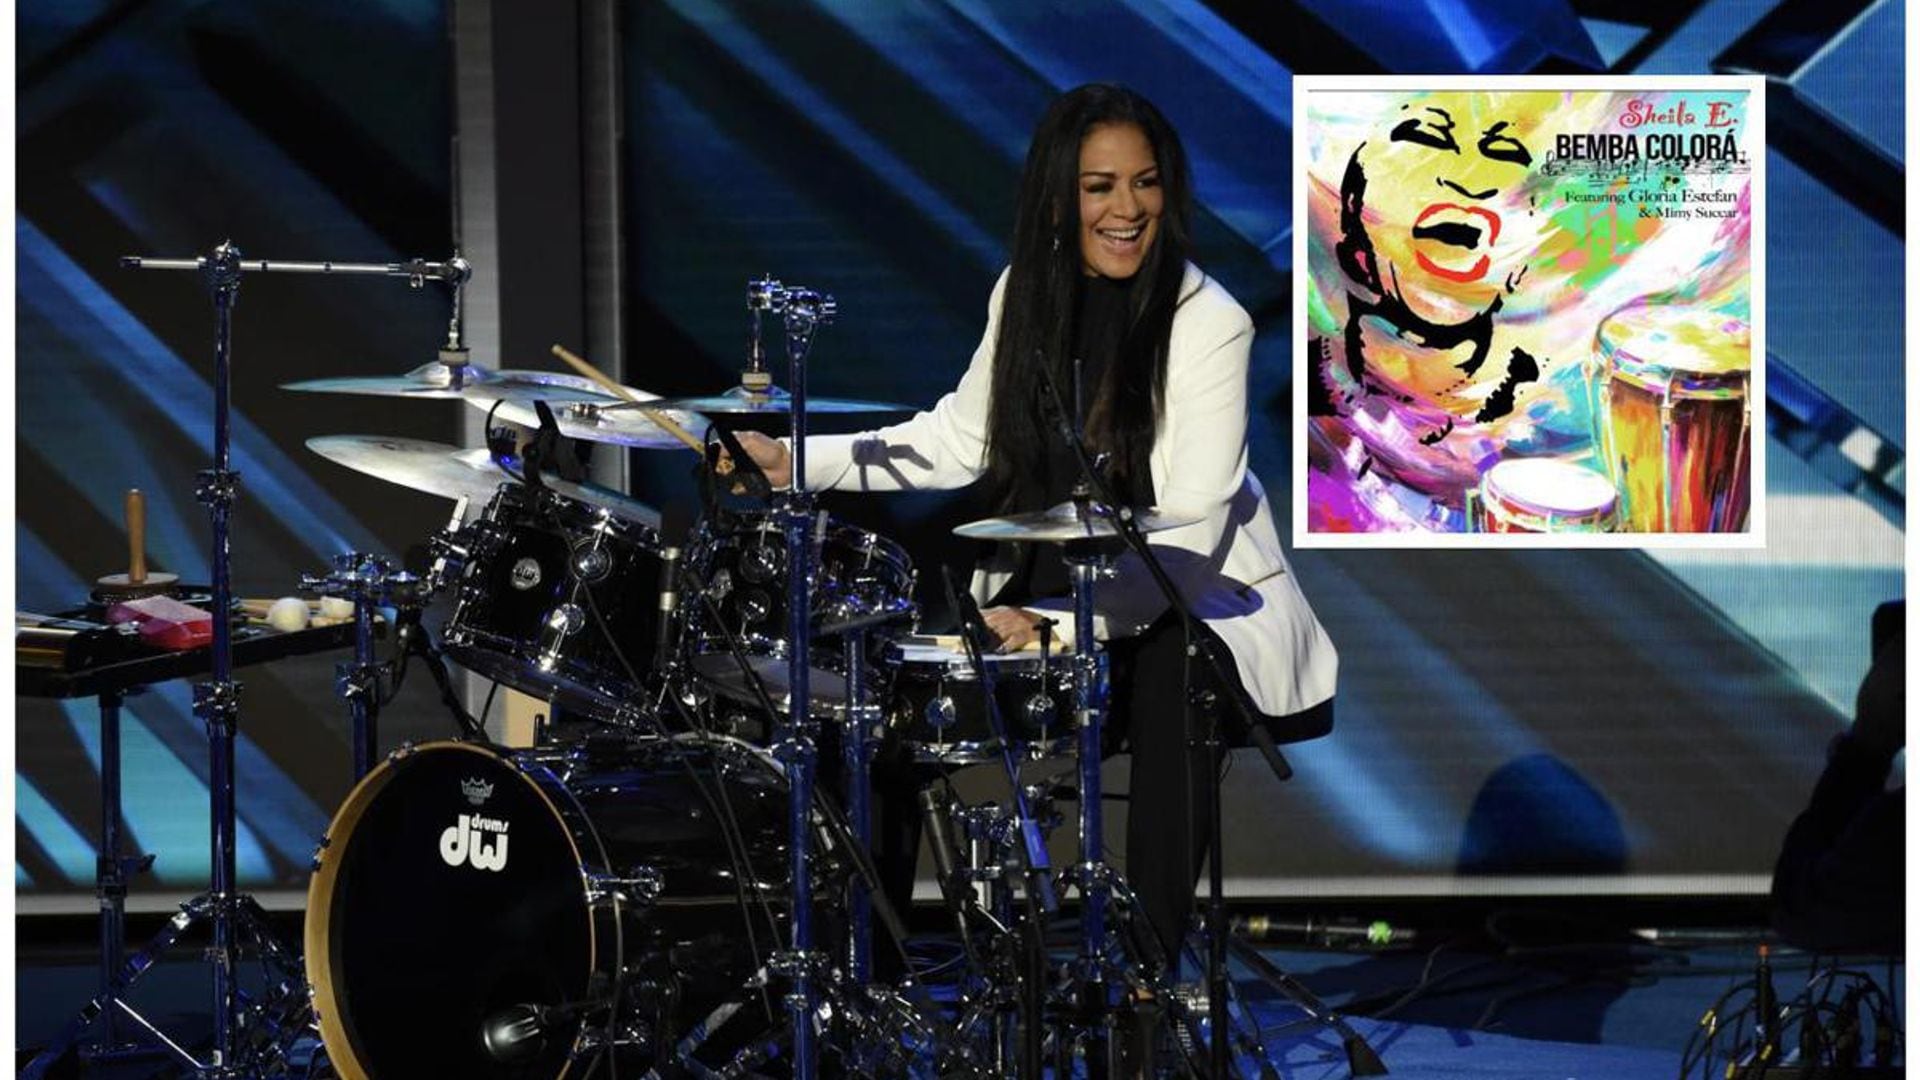 The Queen of Percussion Sheila E. releases Celia Cruz cover featuring Gloria Estefan and Mimy Succar